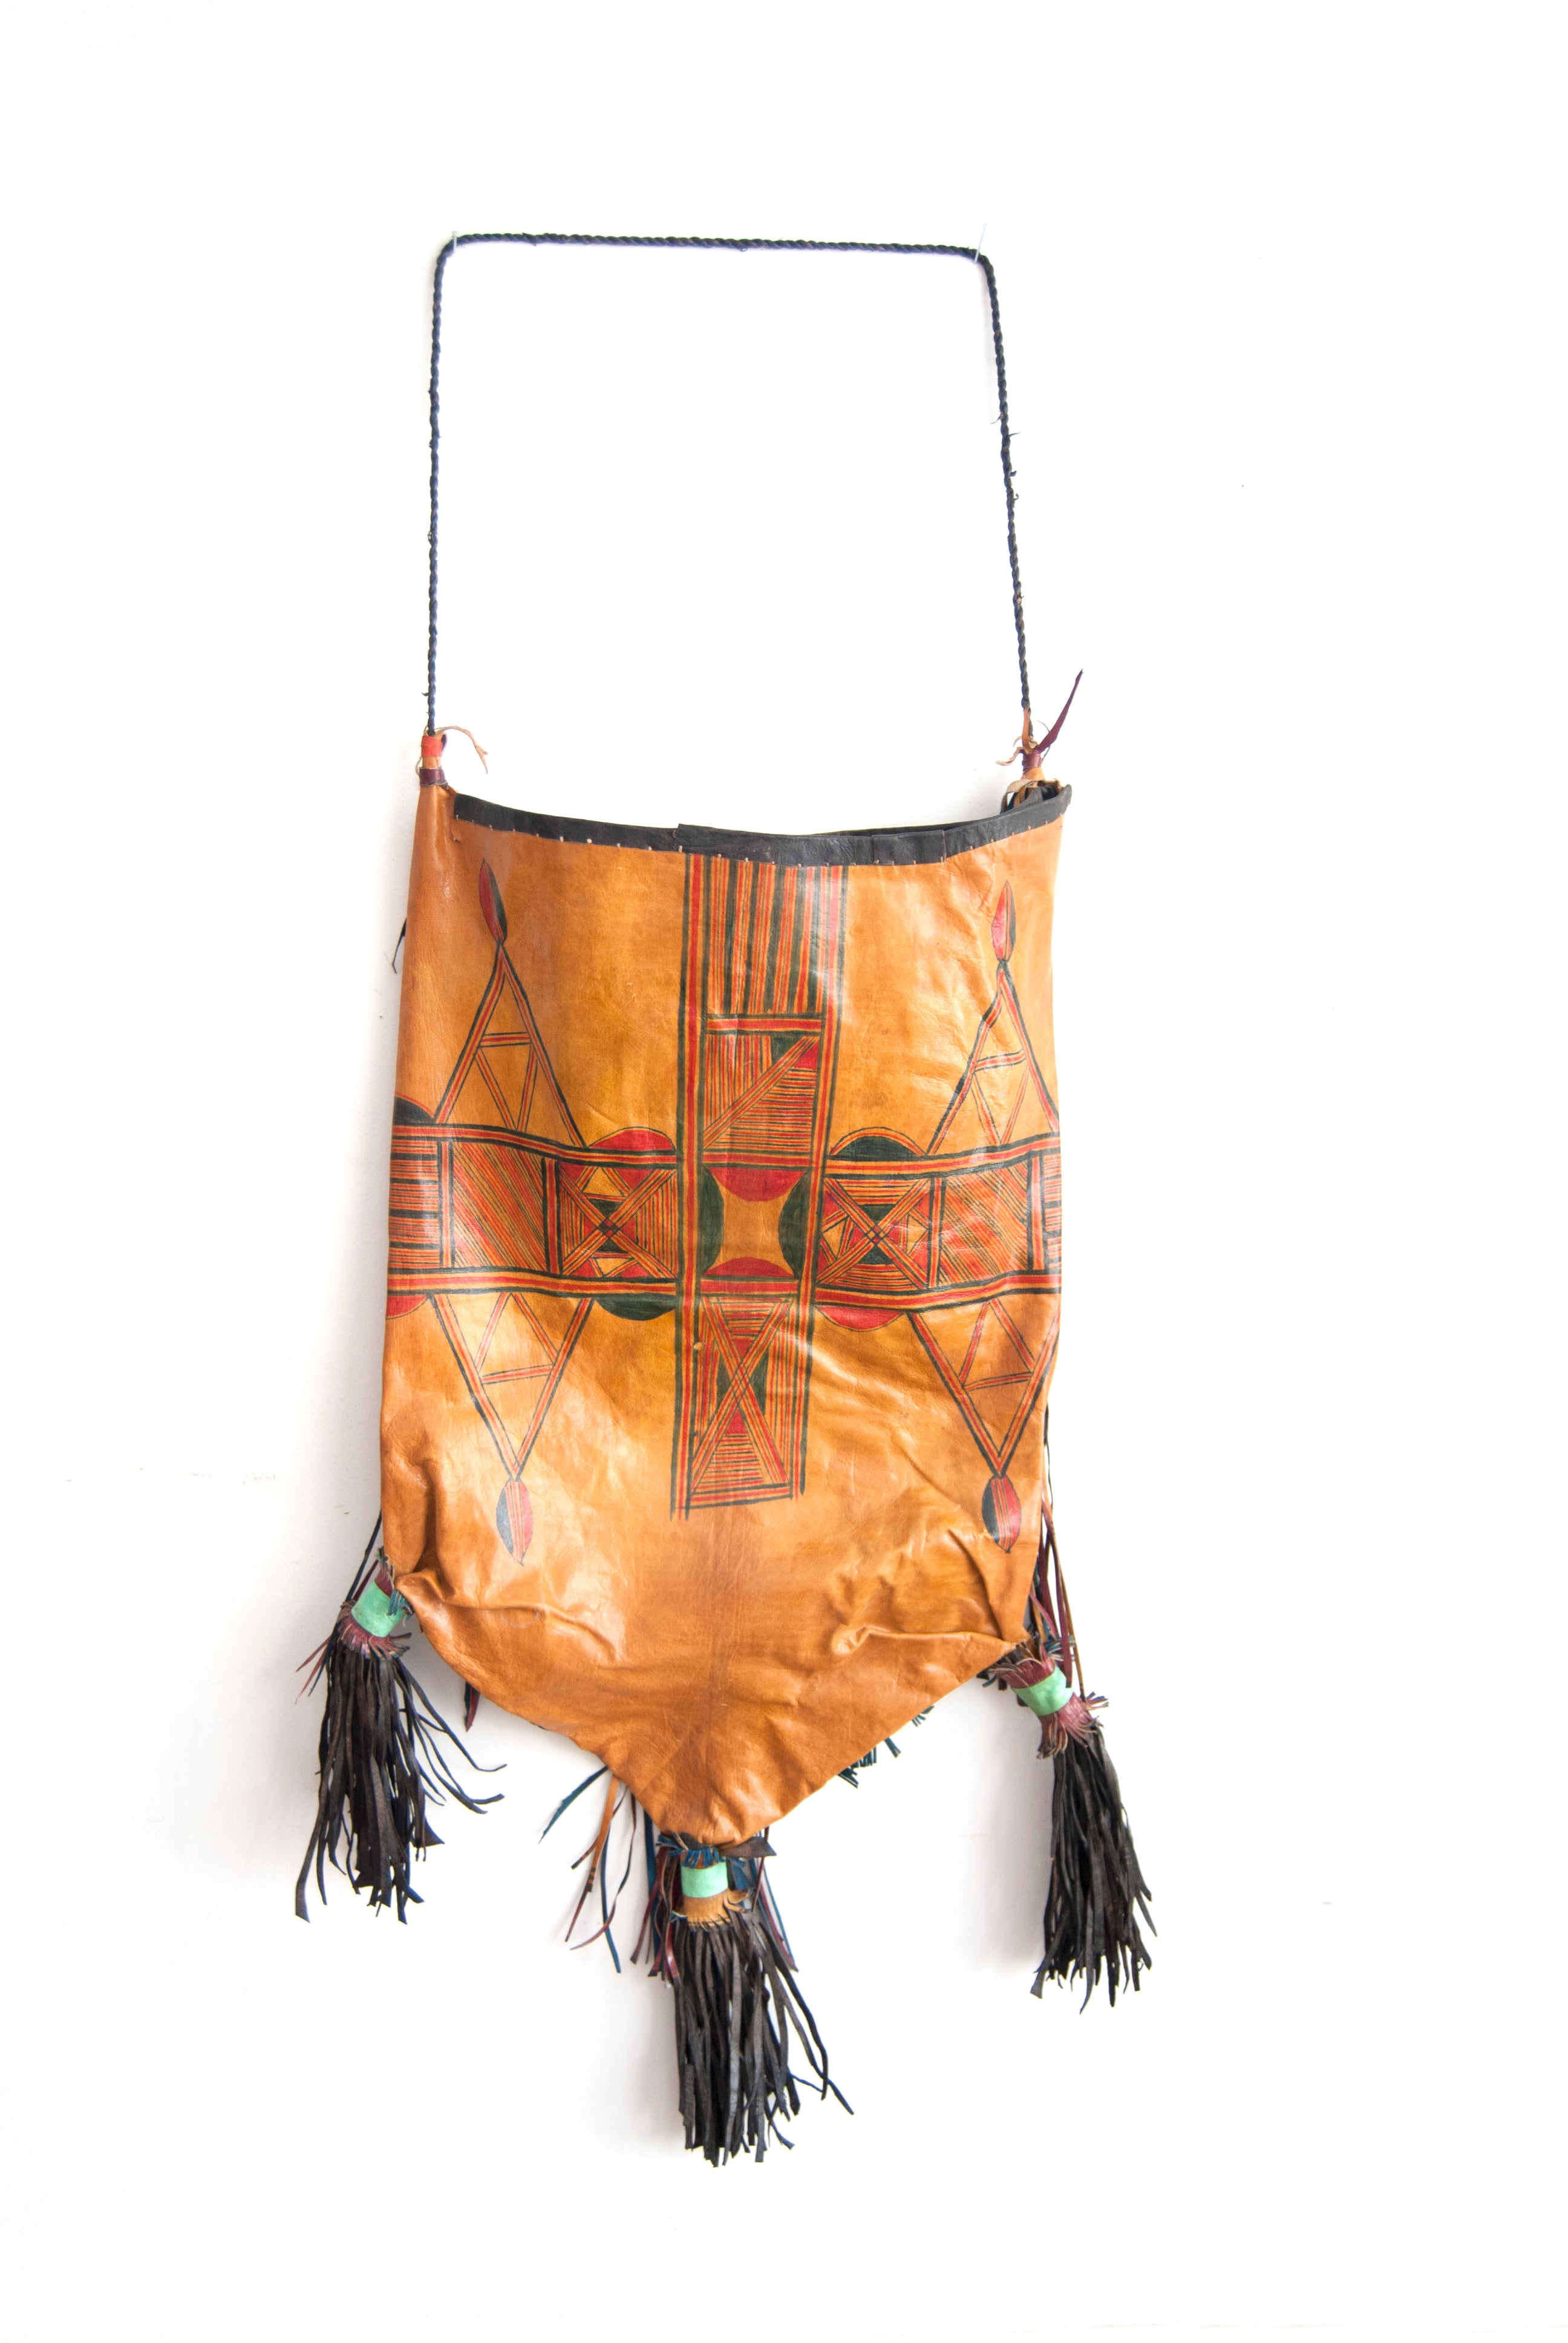 Tuareg Hand Painted Bag